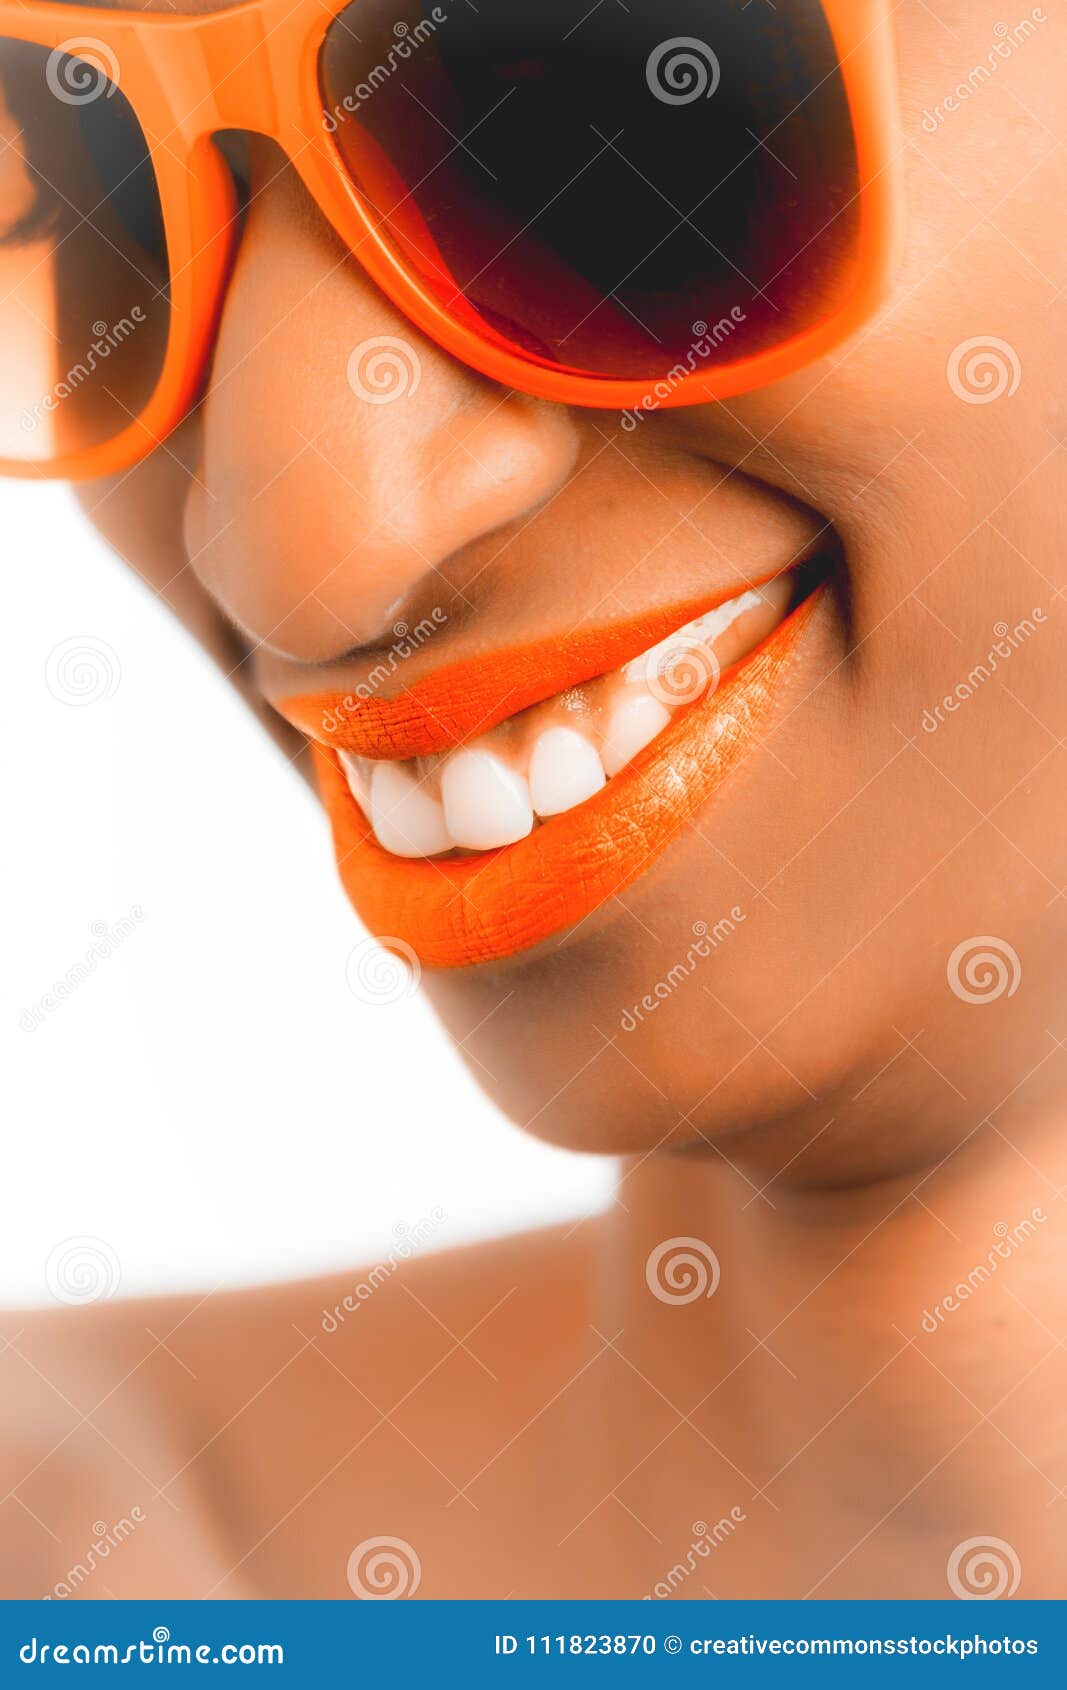 Woman Wearing Orange Frame Sunglasses And Orange Lipstick Picture